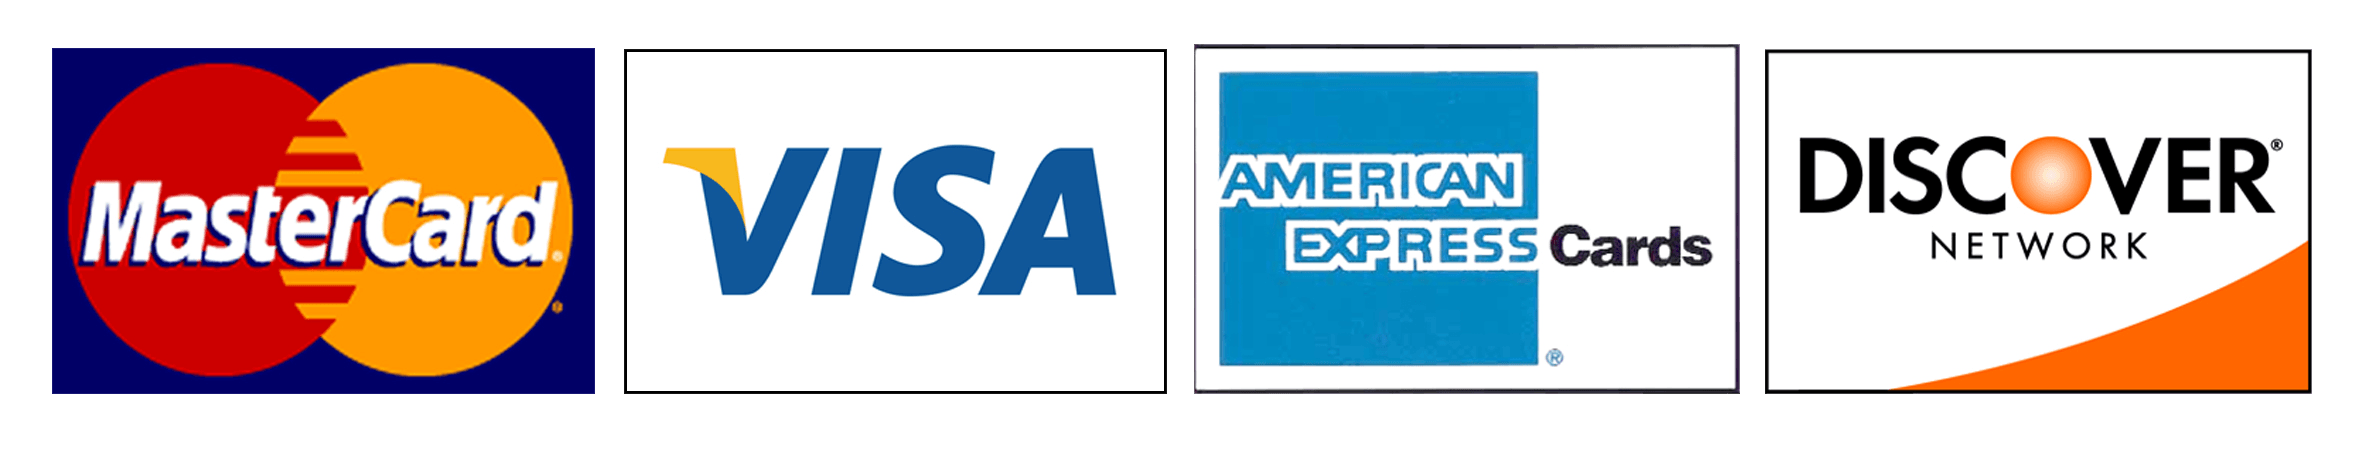 American Express Visa Mastercard Logo